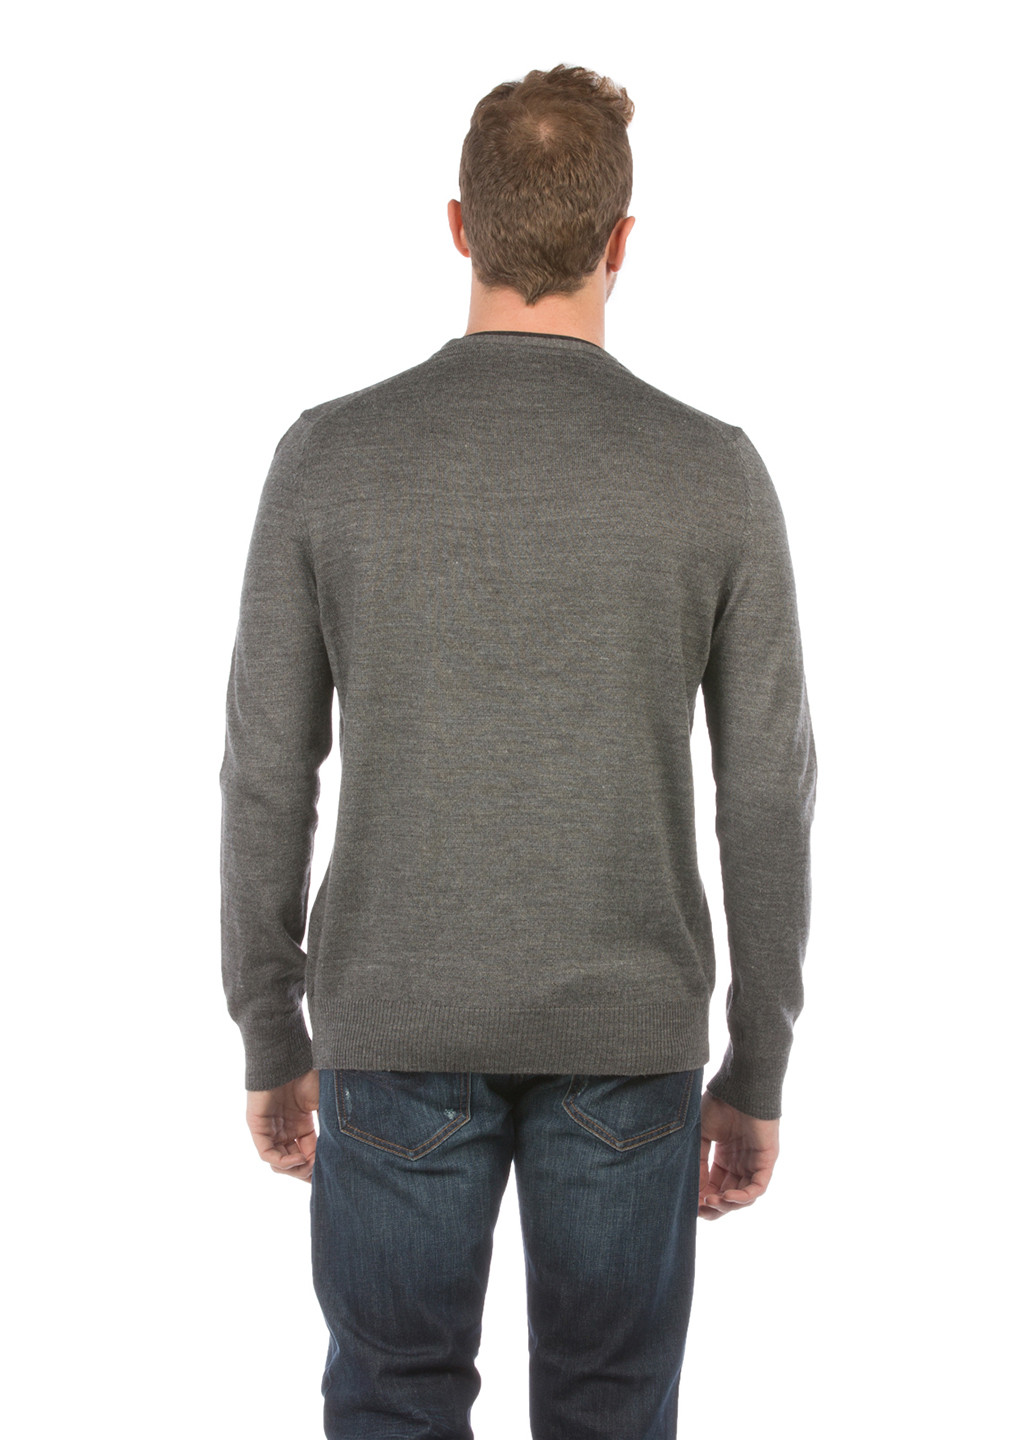 Темно-серый демисезонный пуловер пуловер Colin's